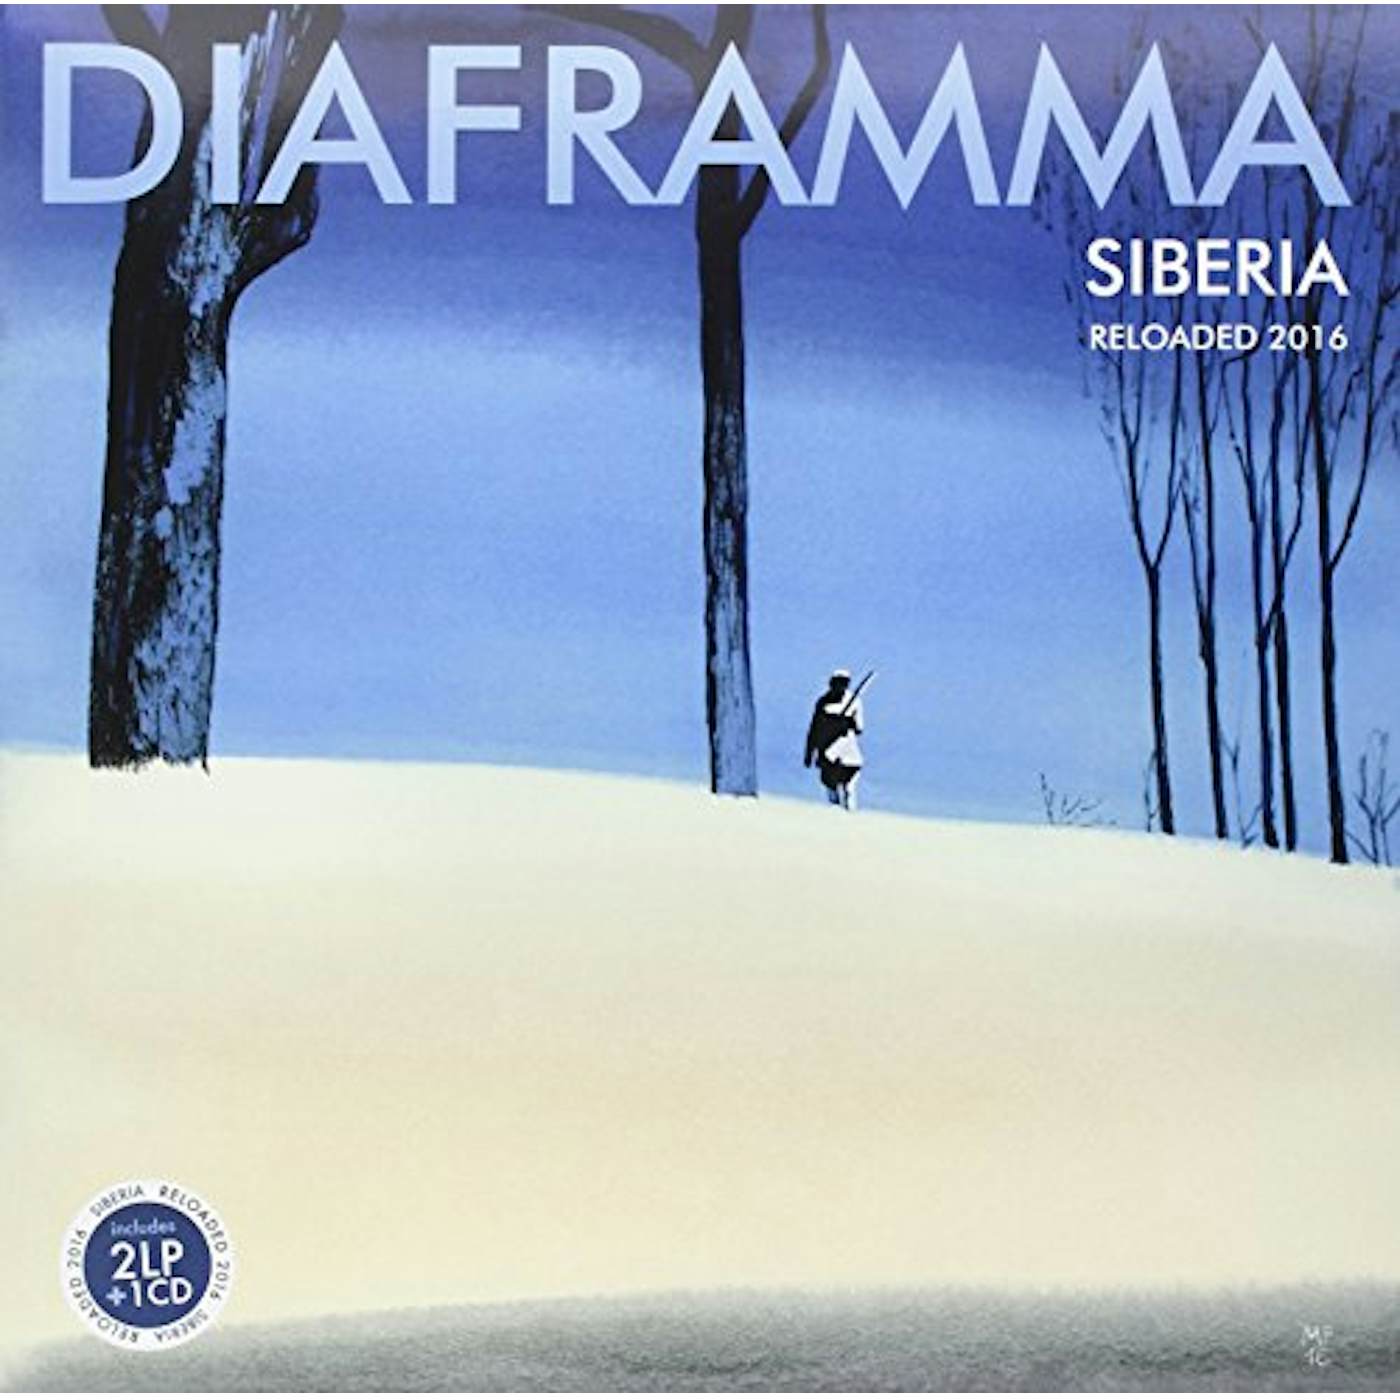 Diaframma Siberia Reloaded 2016 Vinyl Record